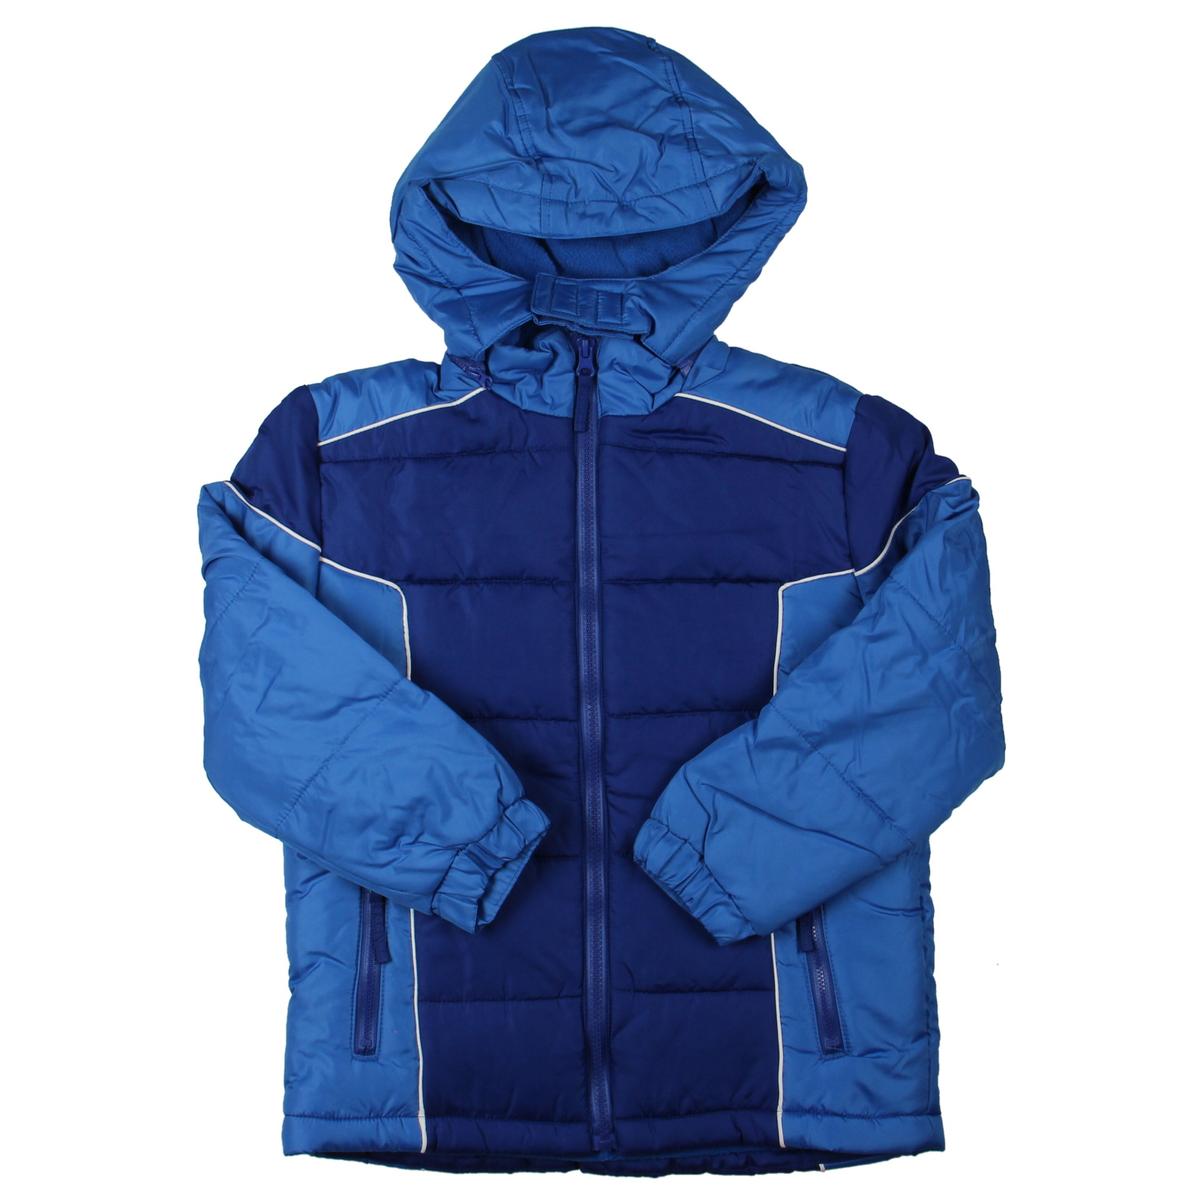 Northpoint Boys Fleece 2-In-1 Jacket Basic Coat Outerwear BHFO 5867 | eBay